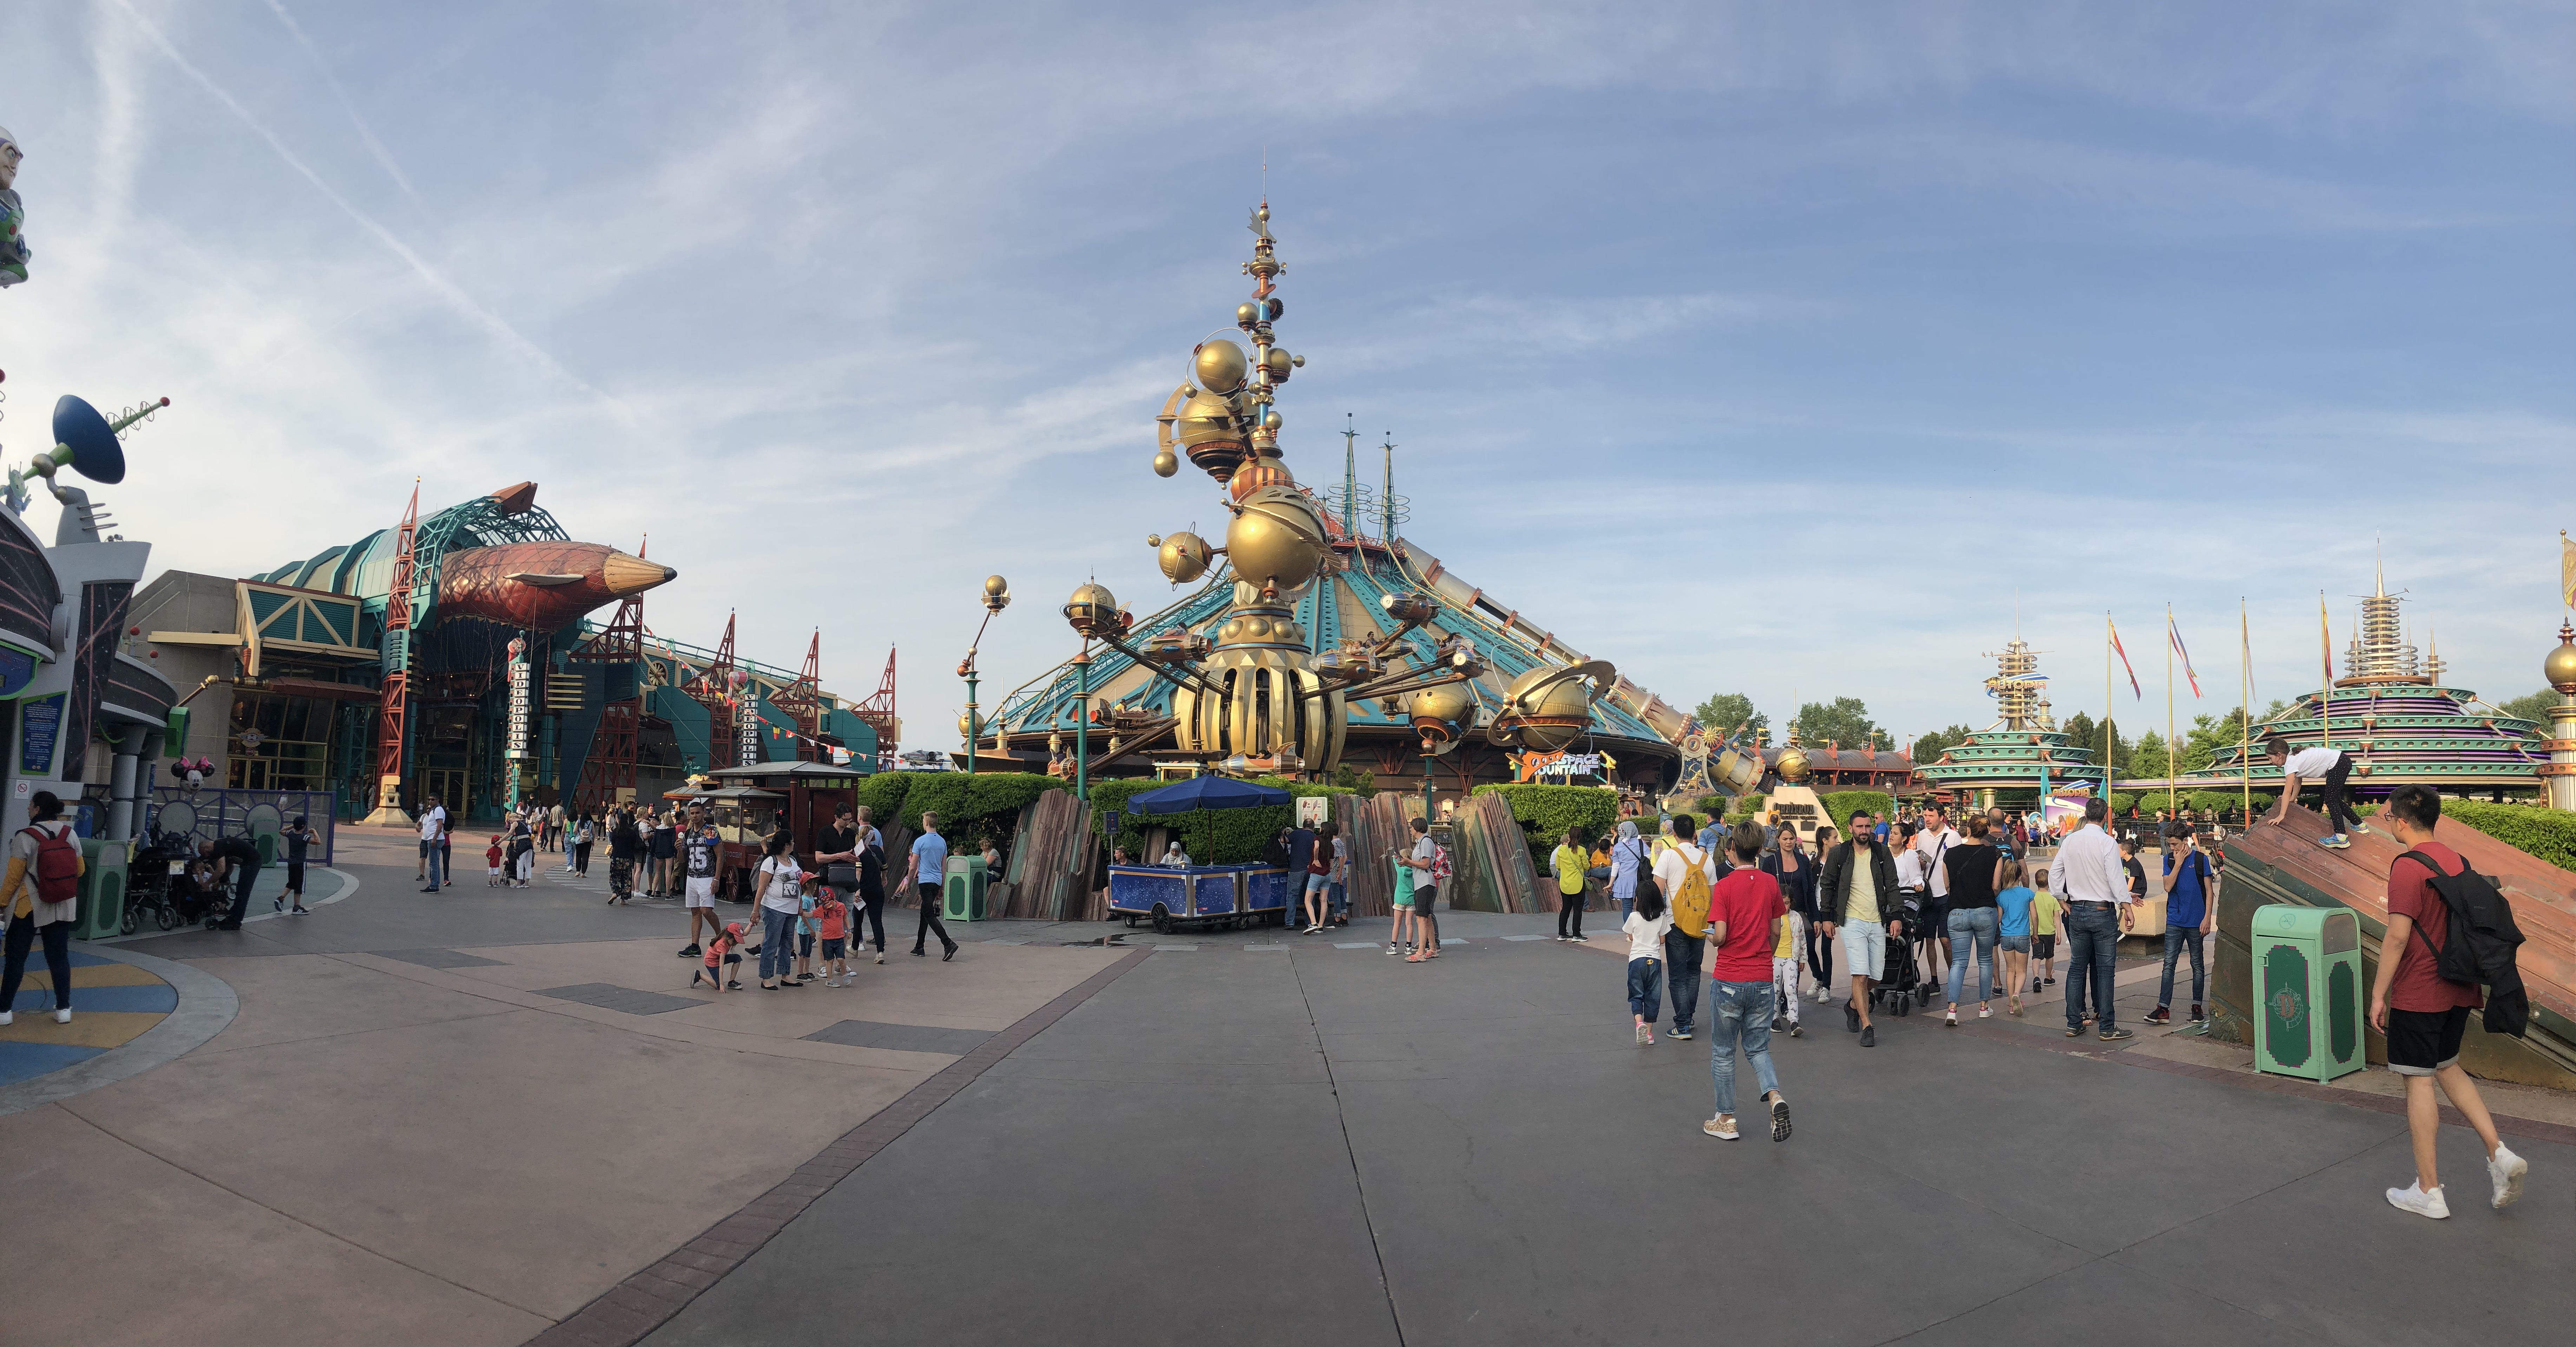 Disneyland Paris Discoveryland